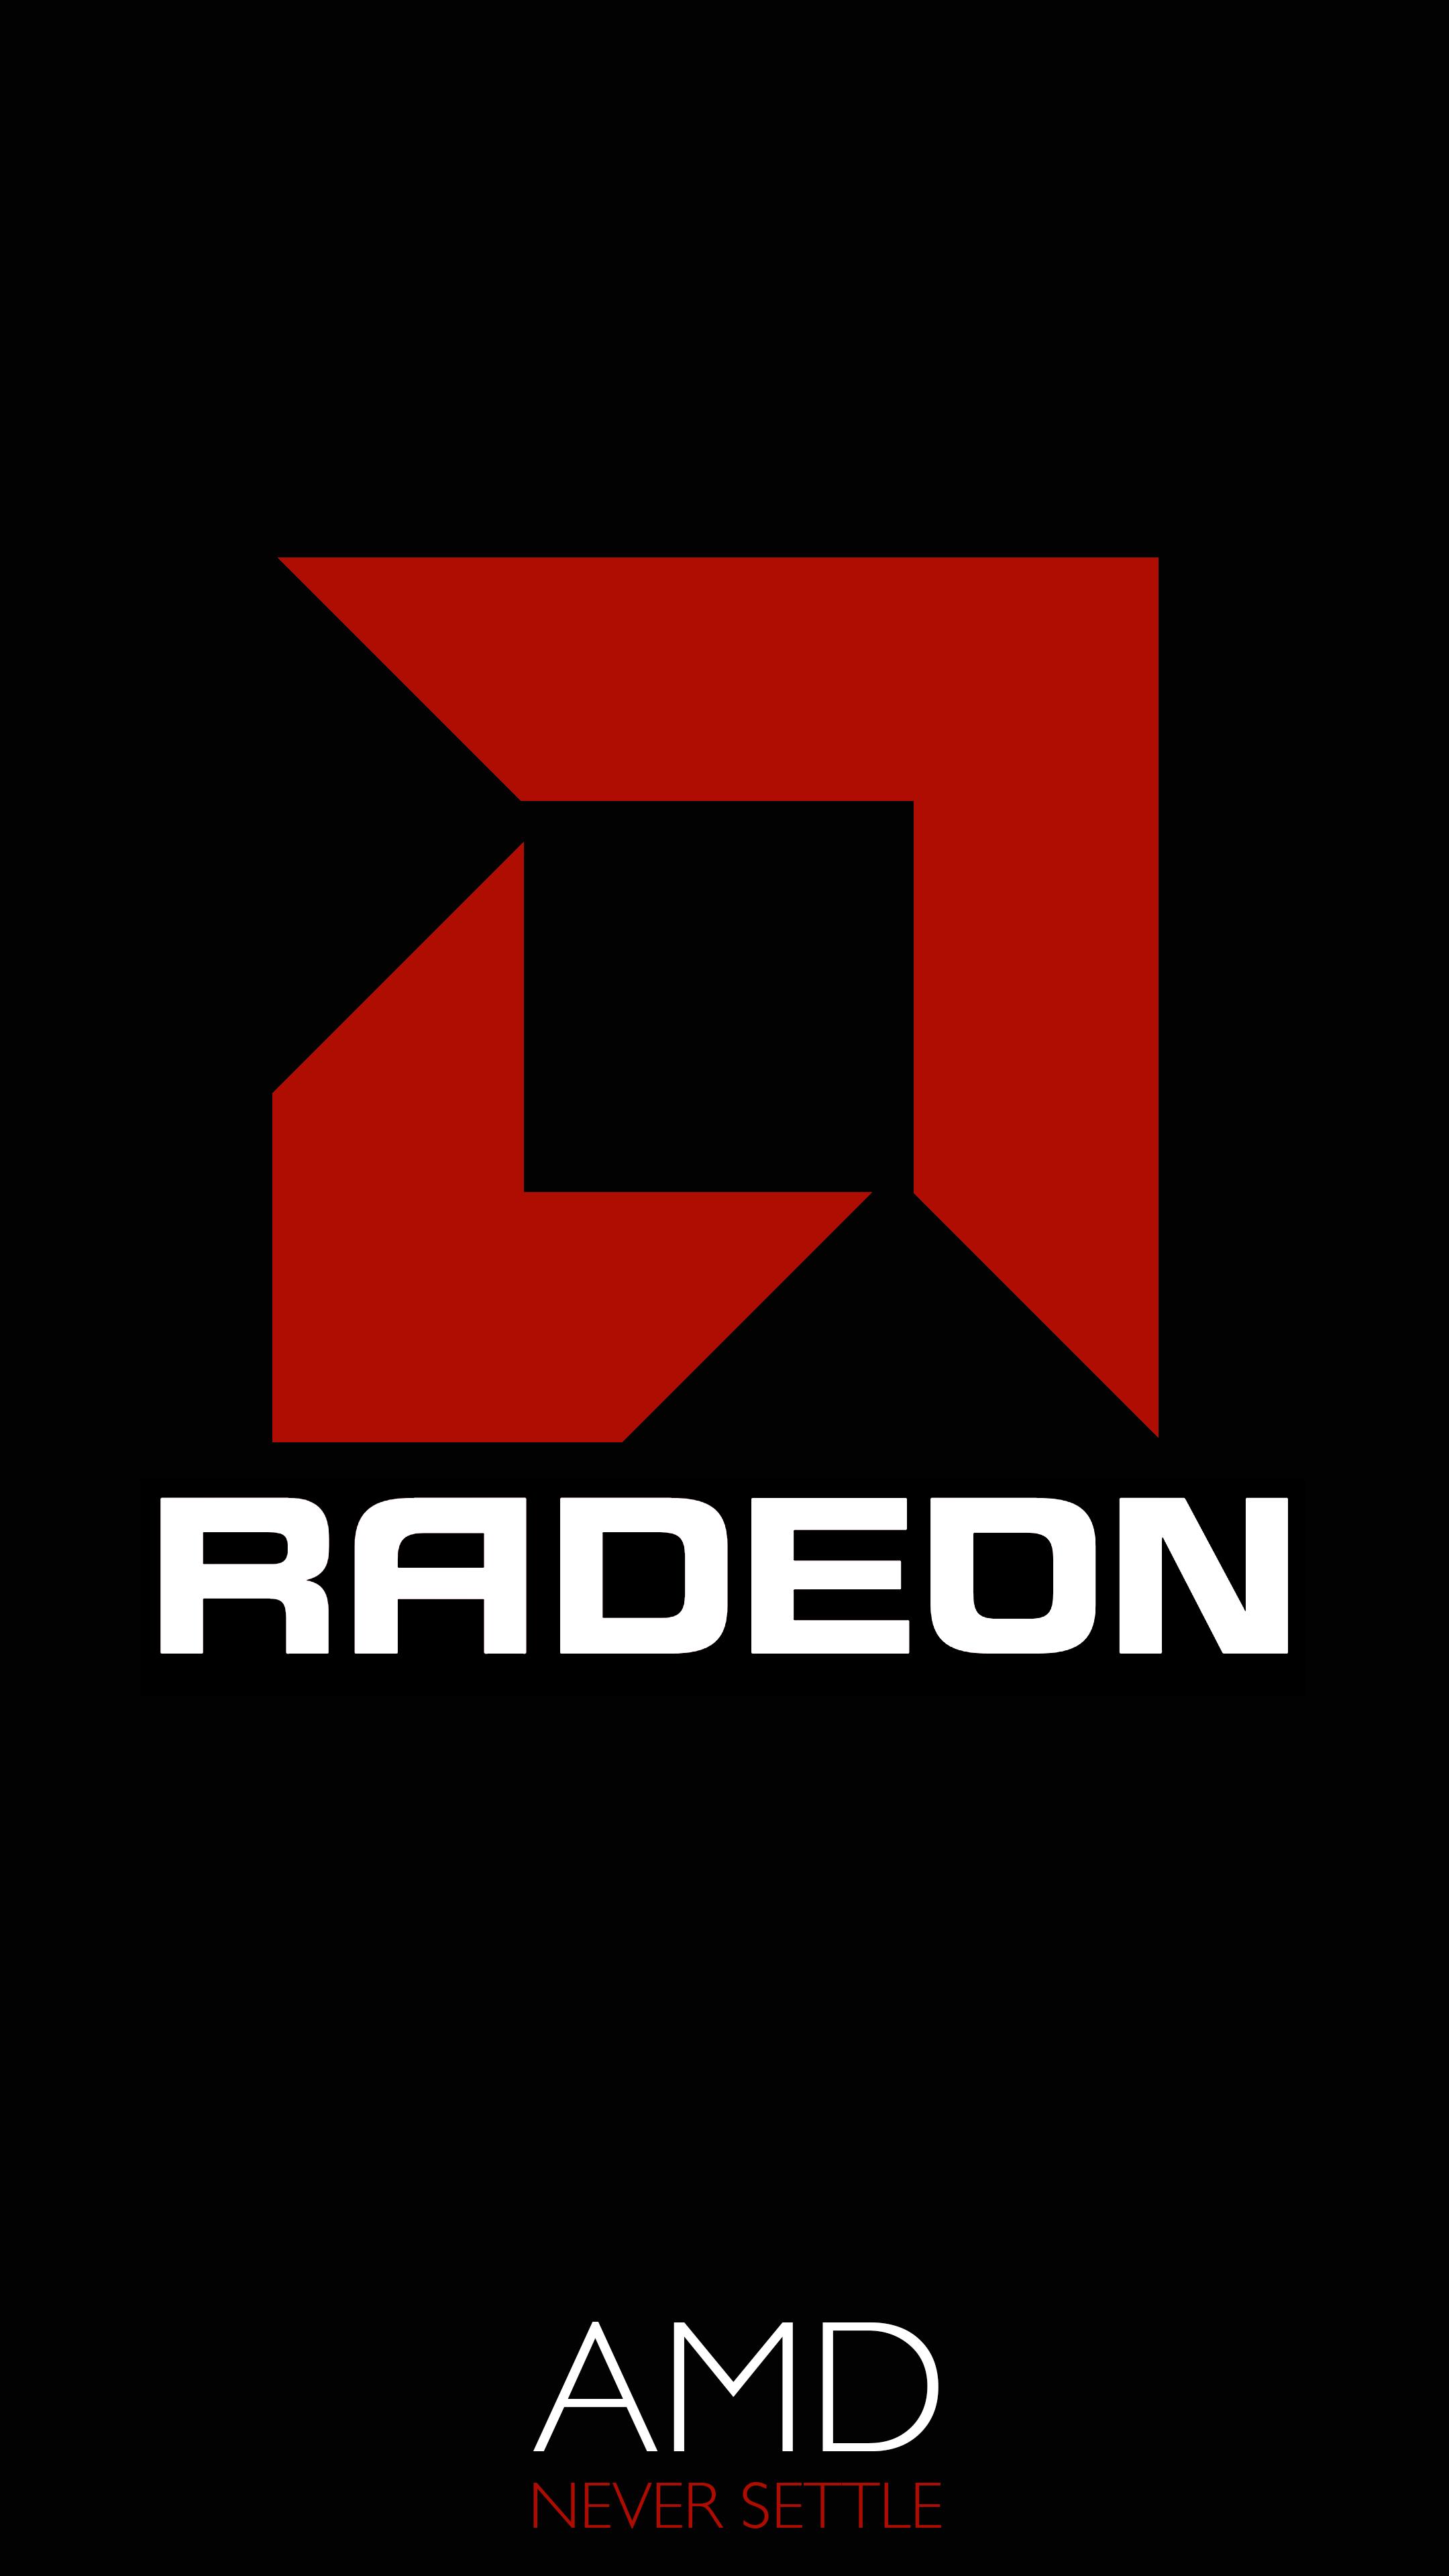 Made a Radeon phone wallpaper if anyone wants it. 2160x3840